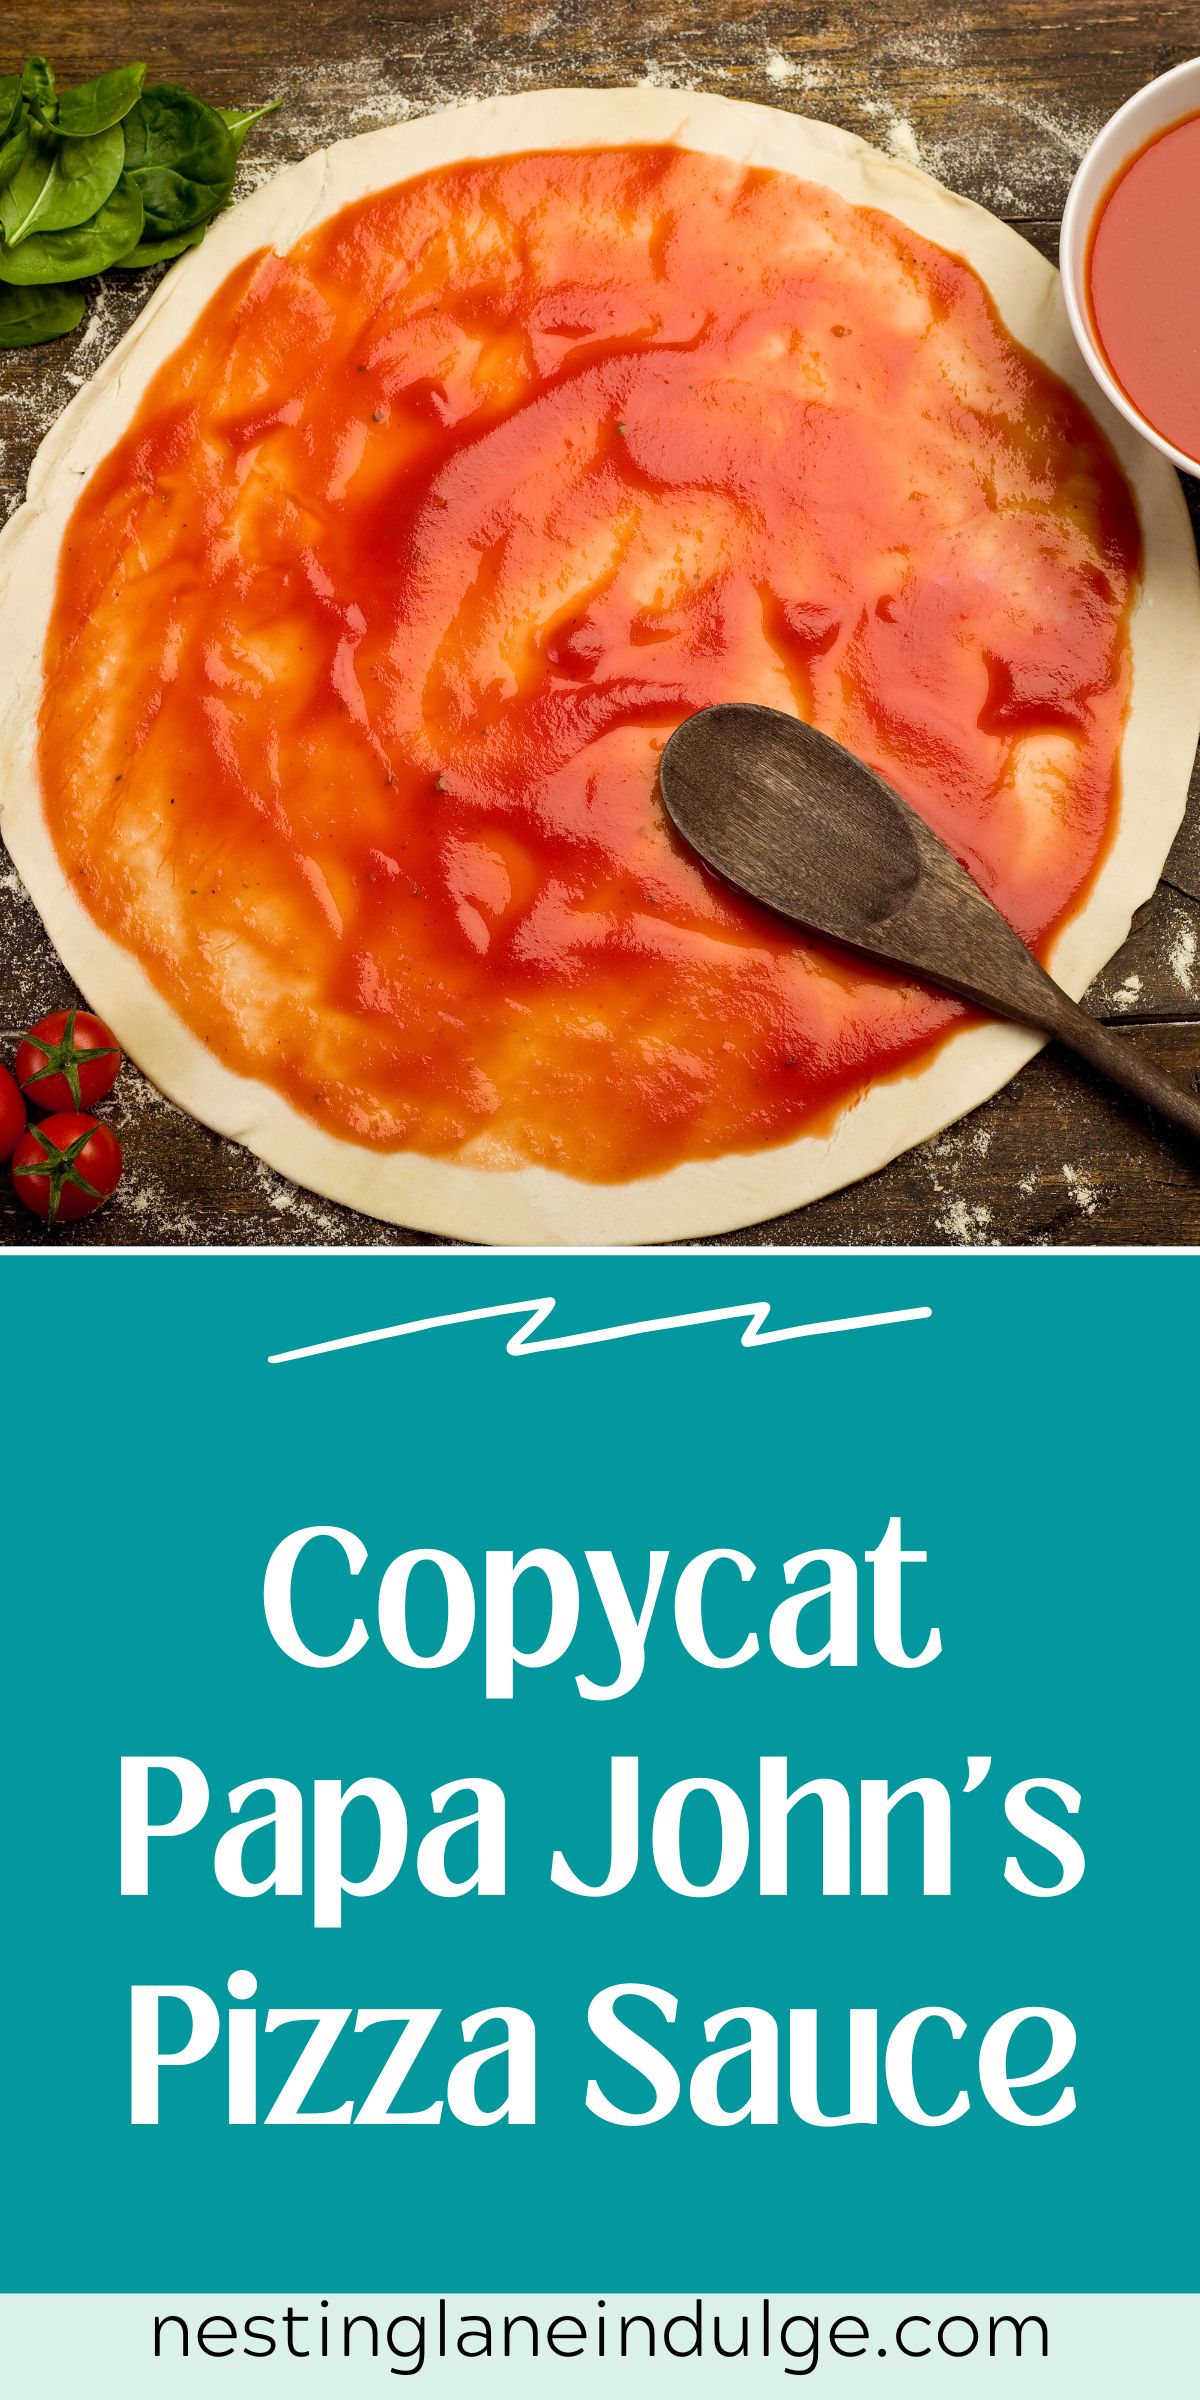 Graphic for Pinterest of Copycat Papa John's Pizza Sauce Recpe.